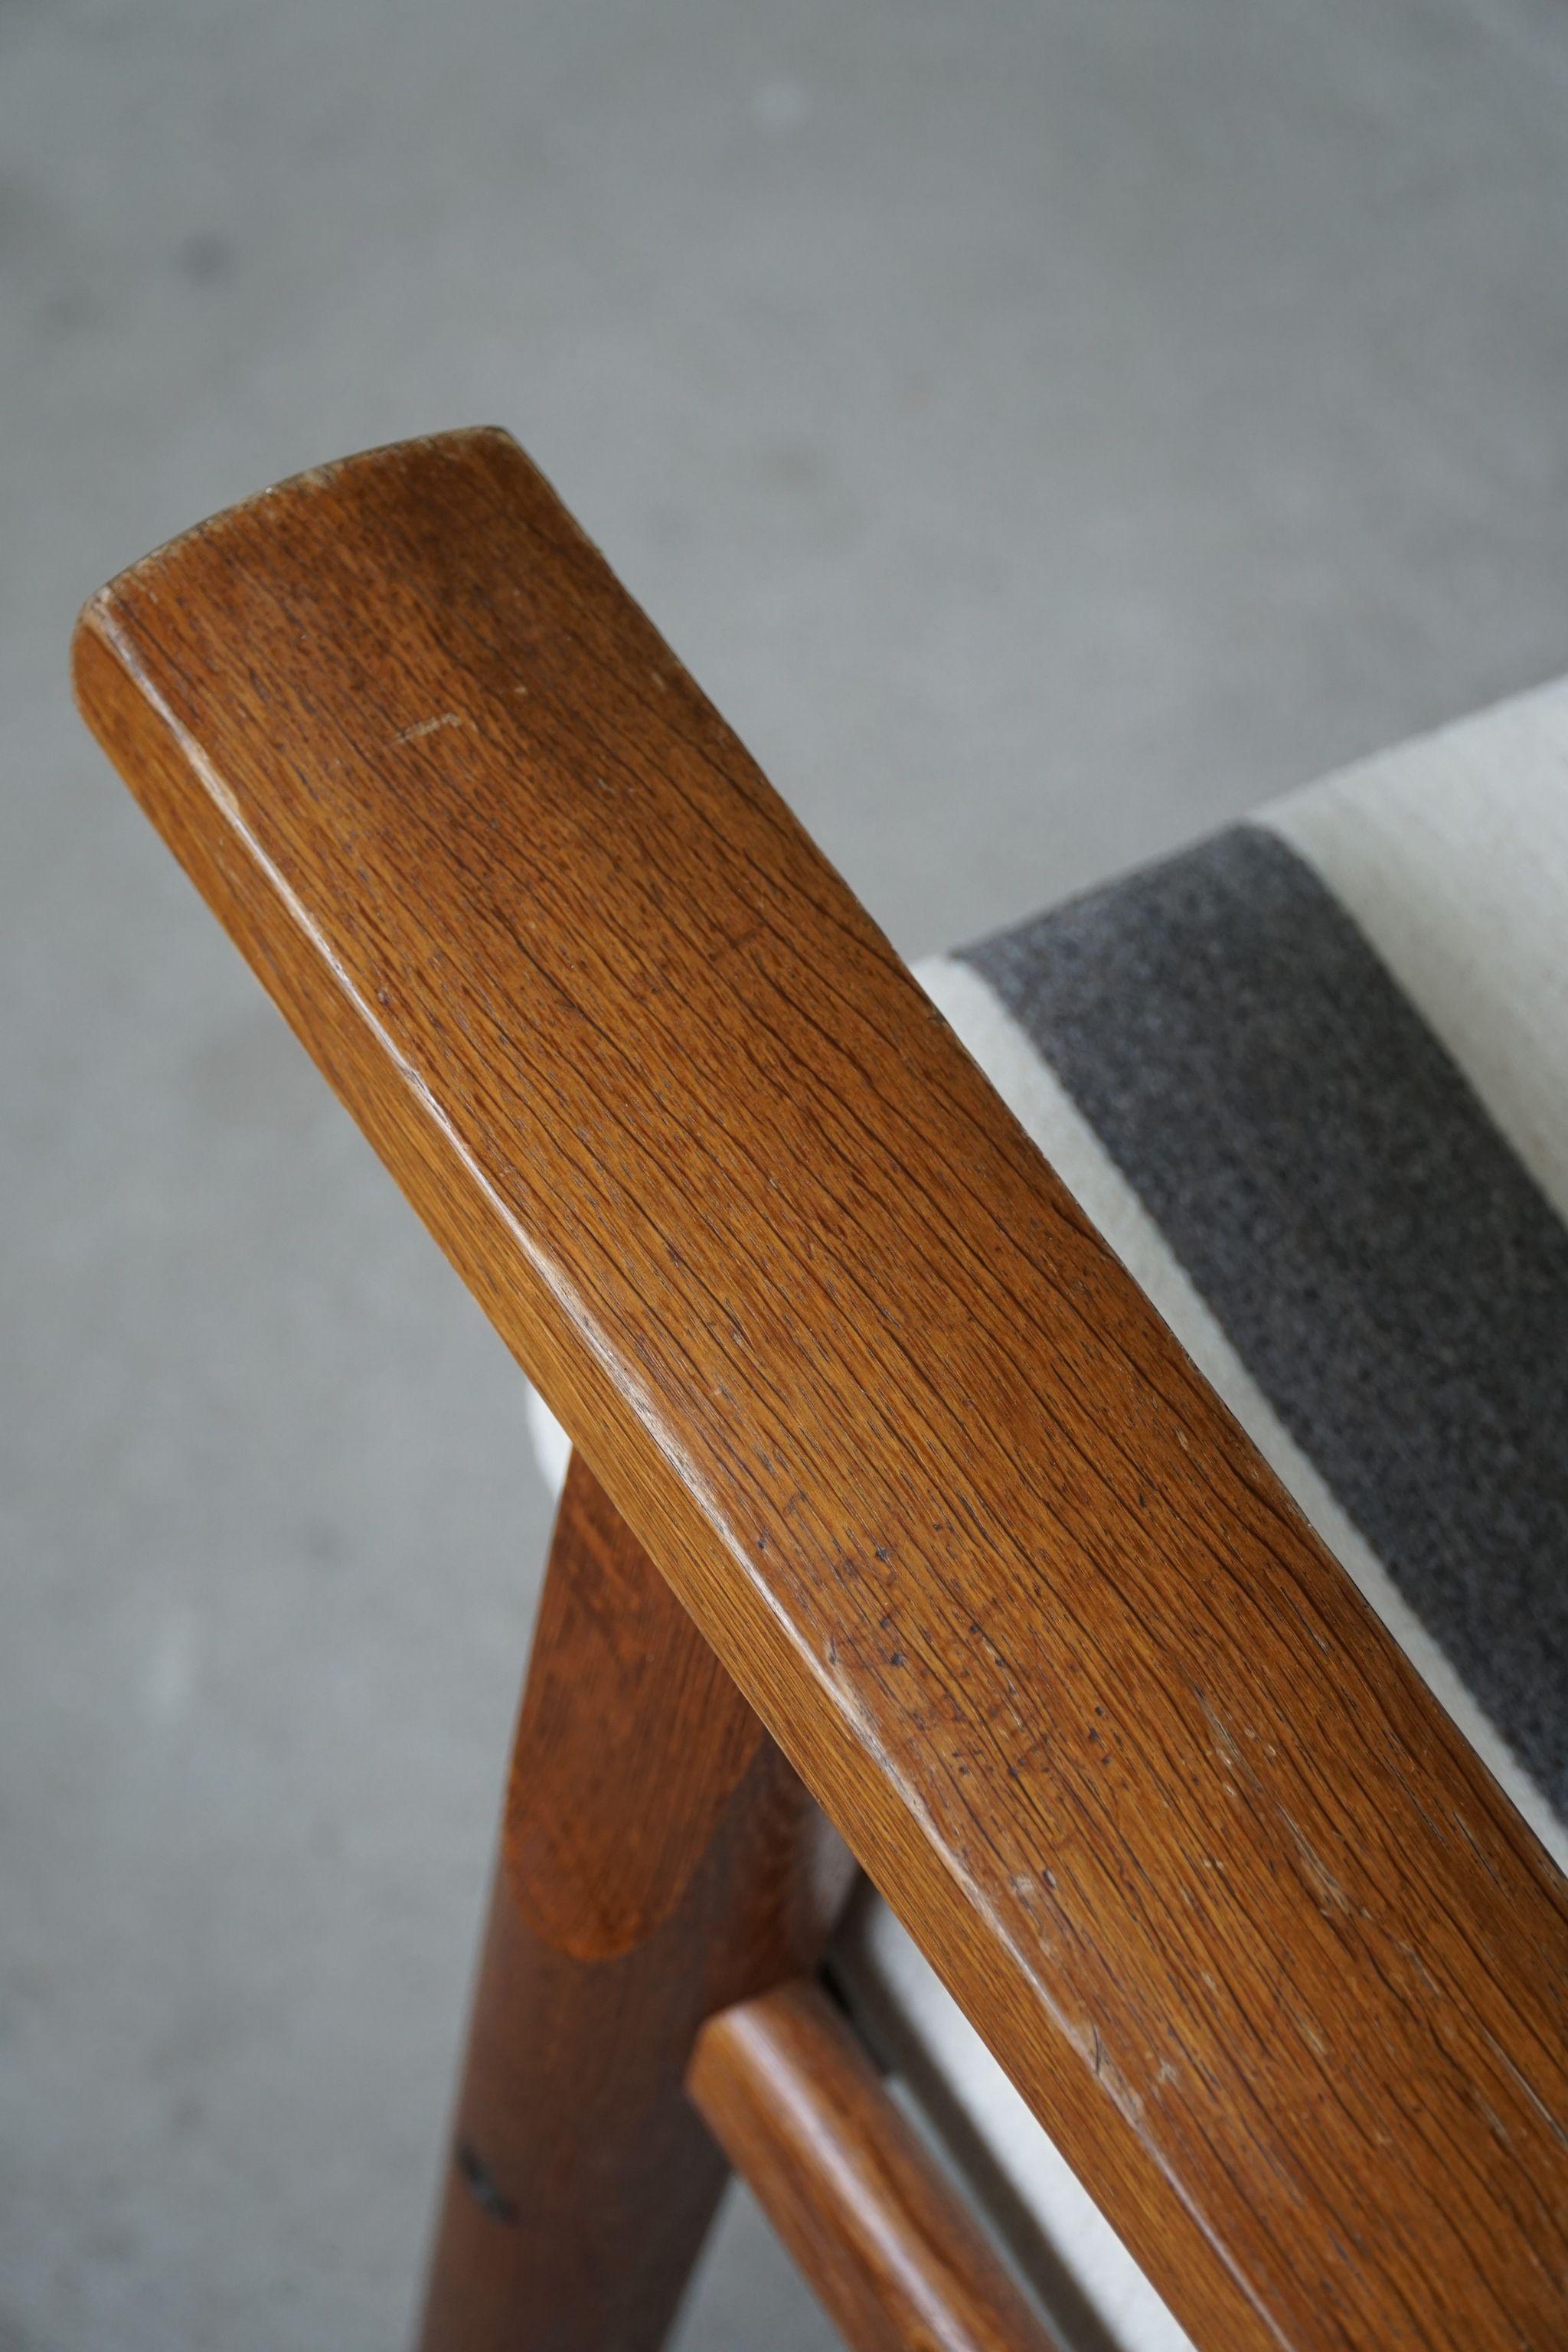 Hans J. Wegner for Getama, Pair of Lounge Chairs in Savak Wool, 